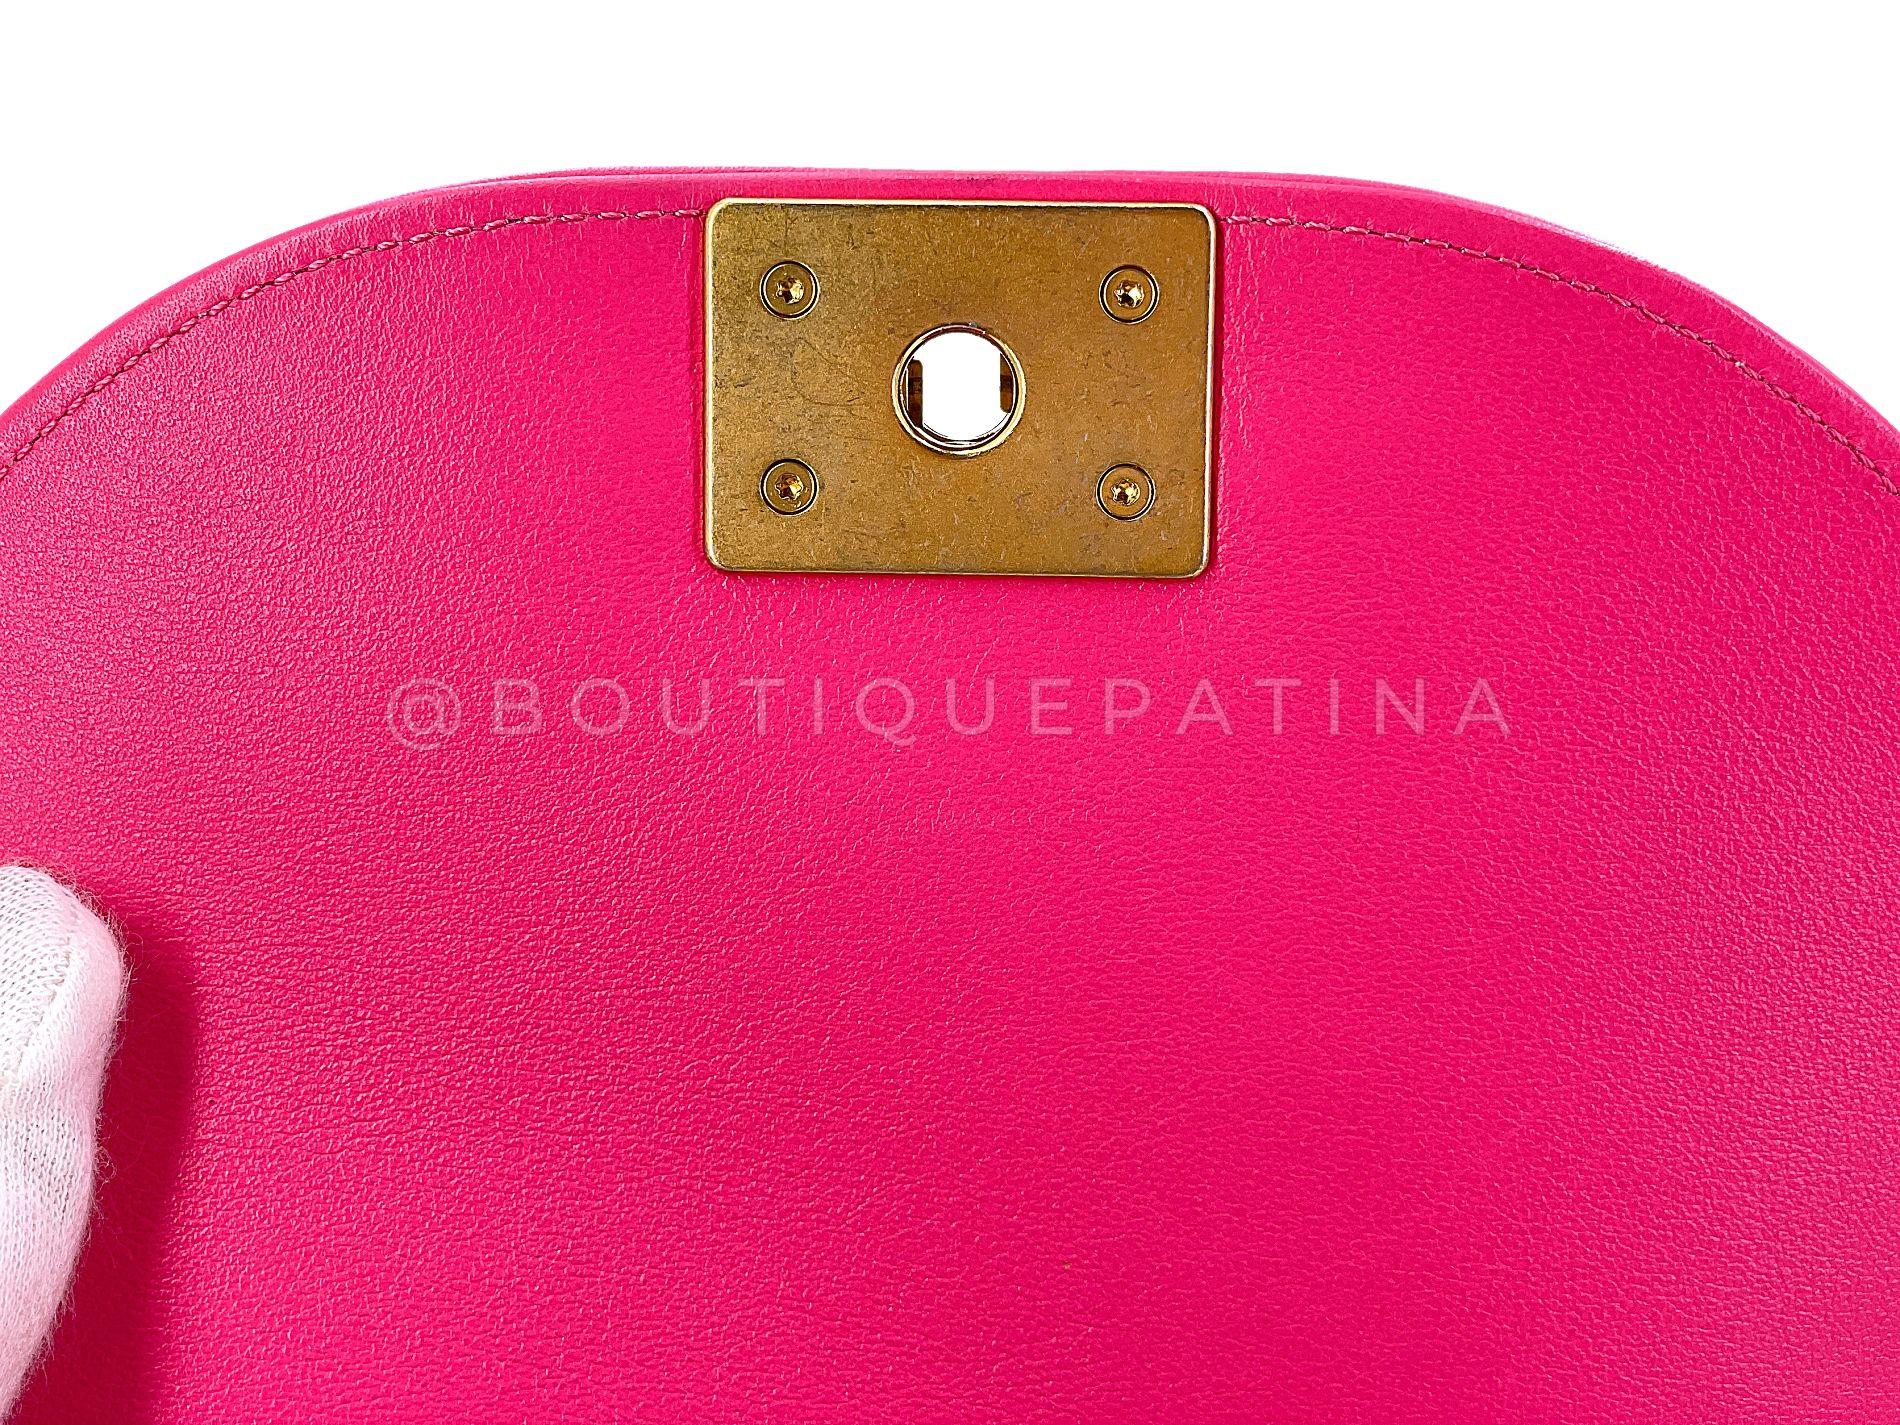 Chanel Fuchsia Pink Shearling Round Boy Flap Bag GHW 67885 For Sale 7